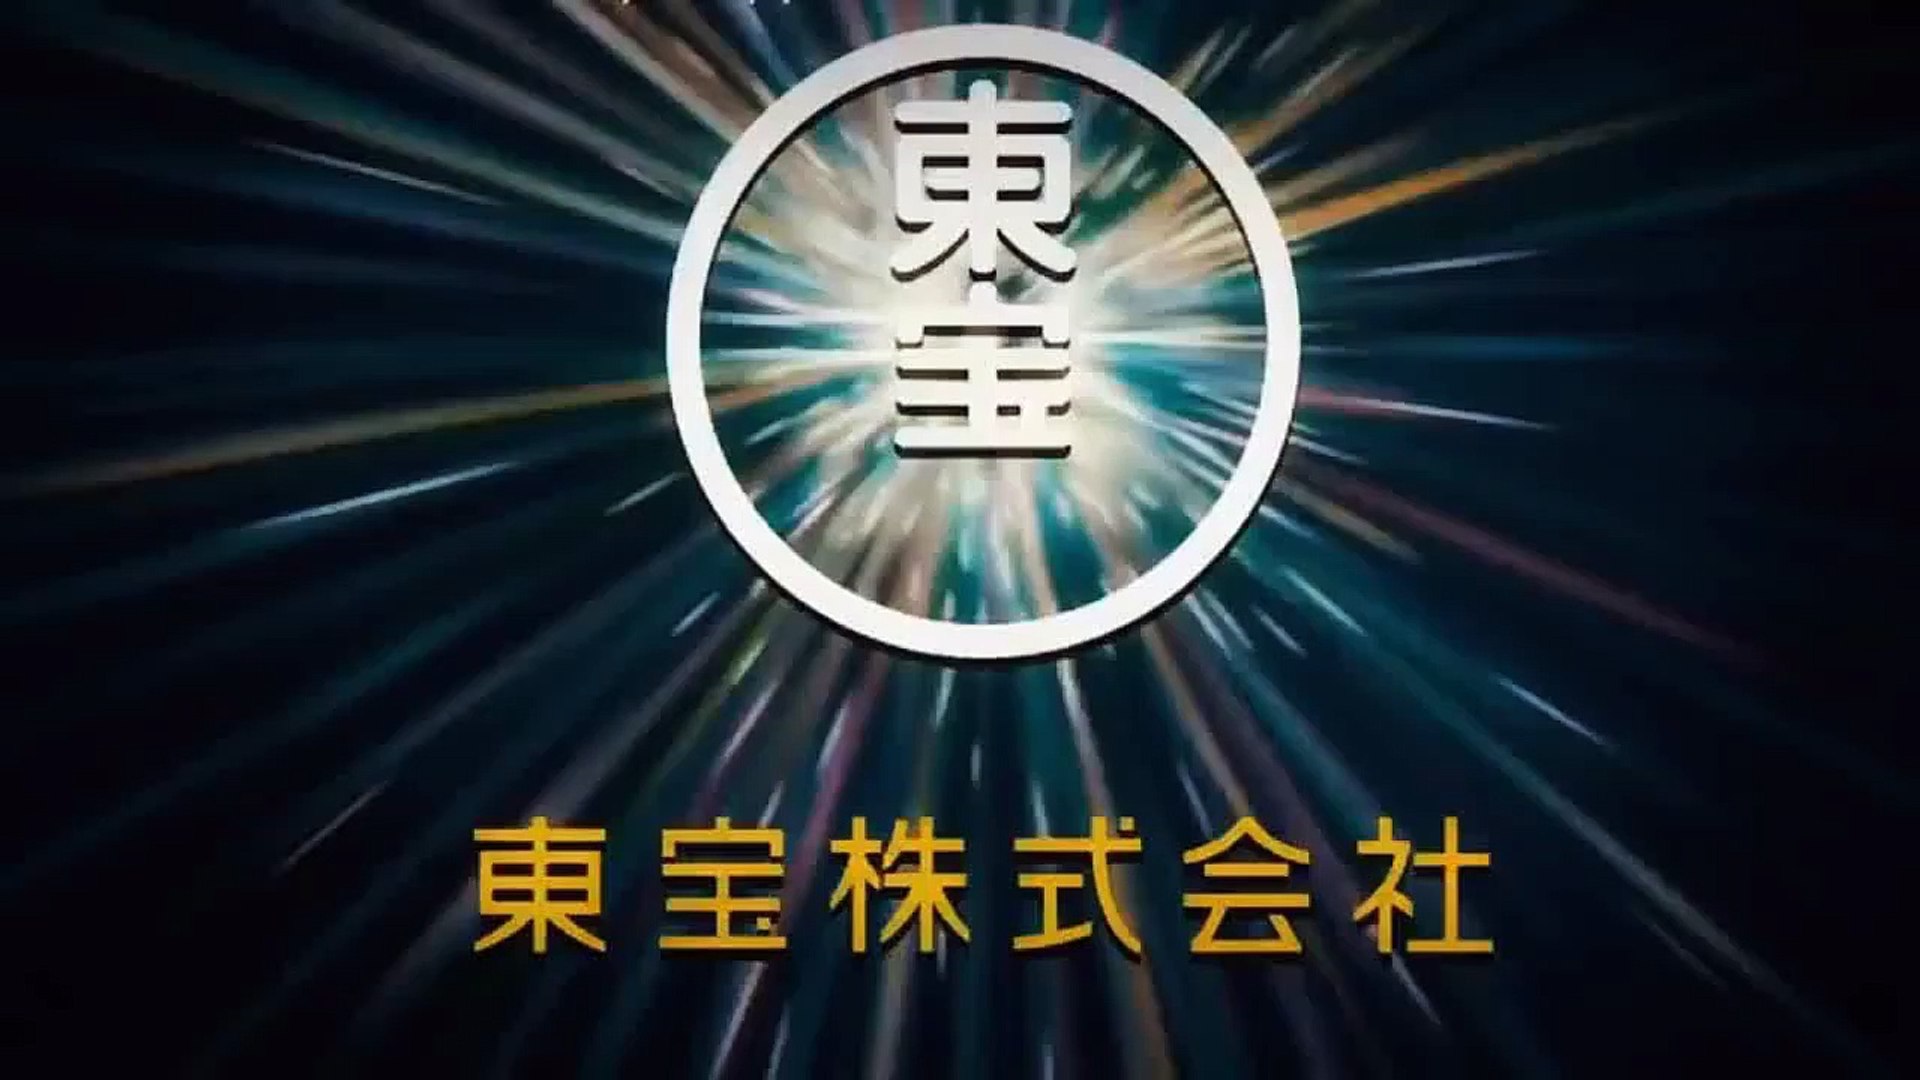 Naruto Road To Ninja Trailer, By Anime Miroku